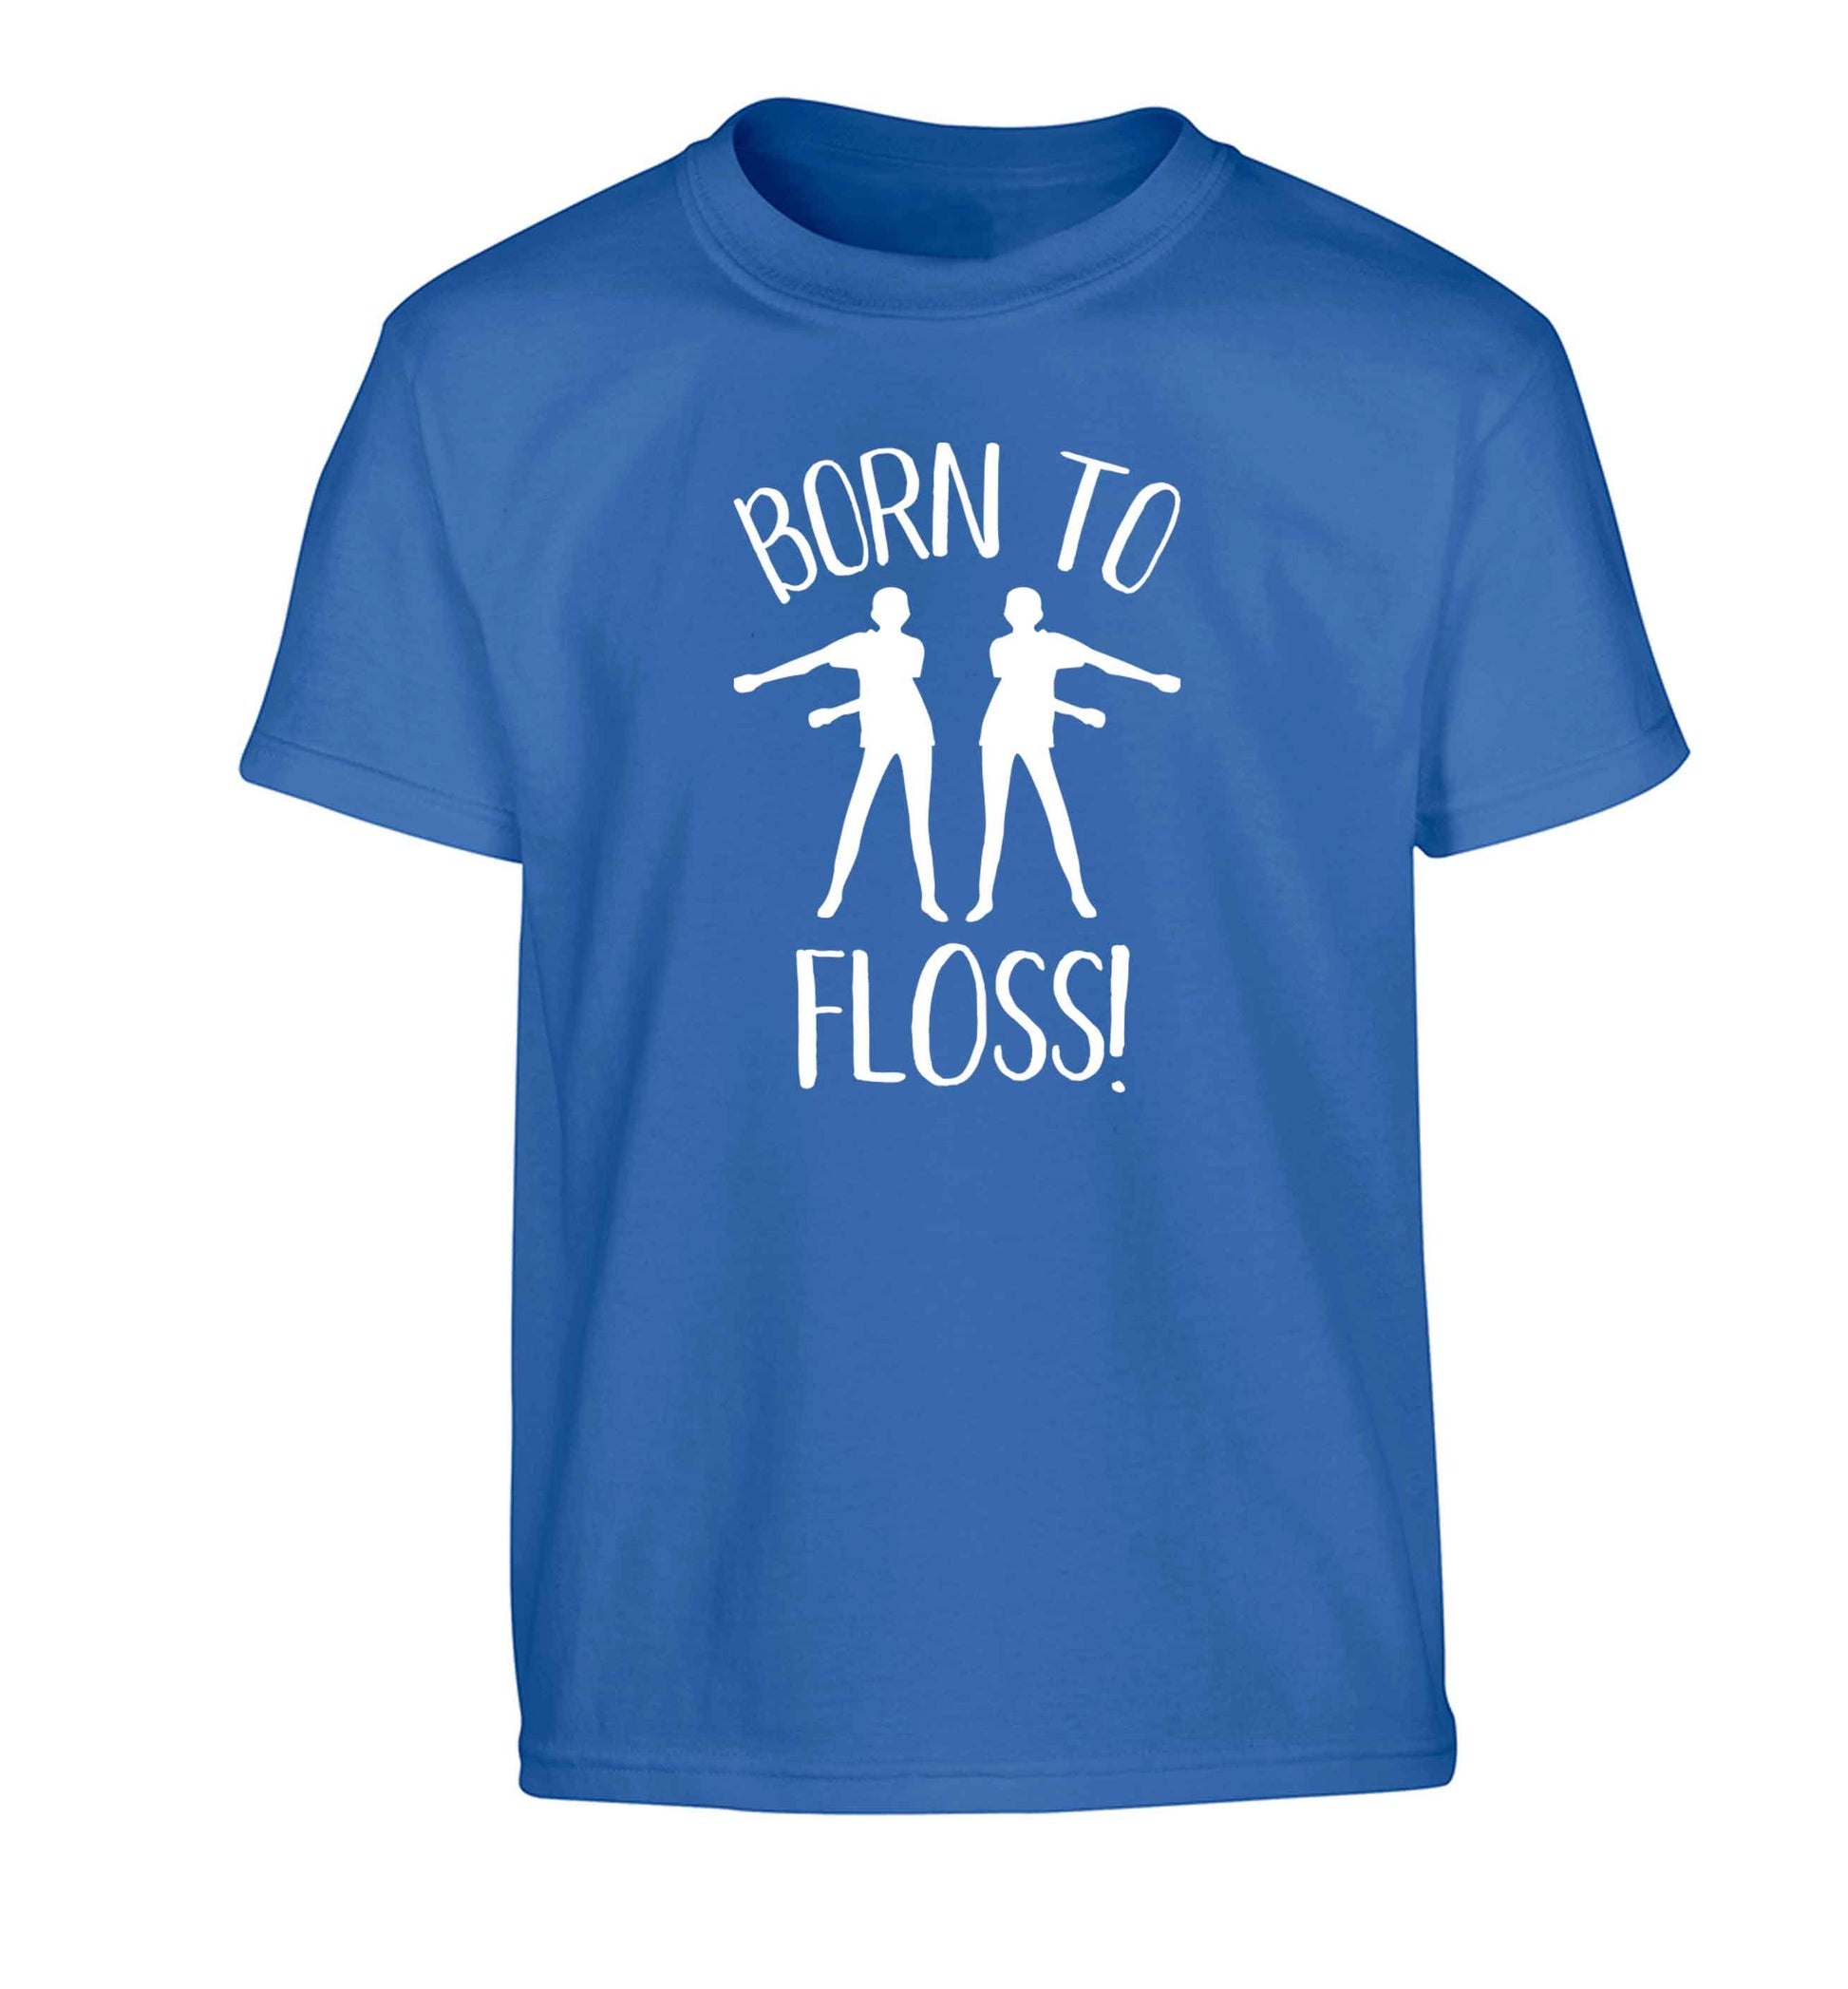 Born to floss Children's blue Tshirt 12-13 Years